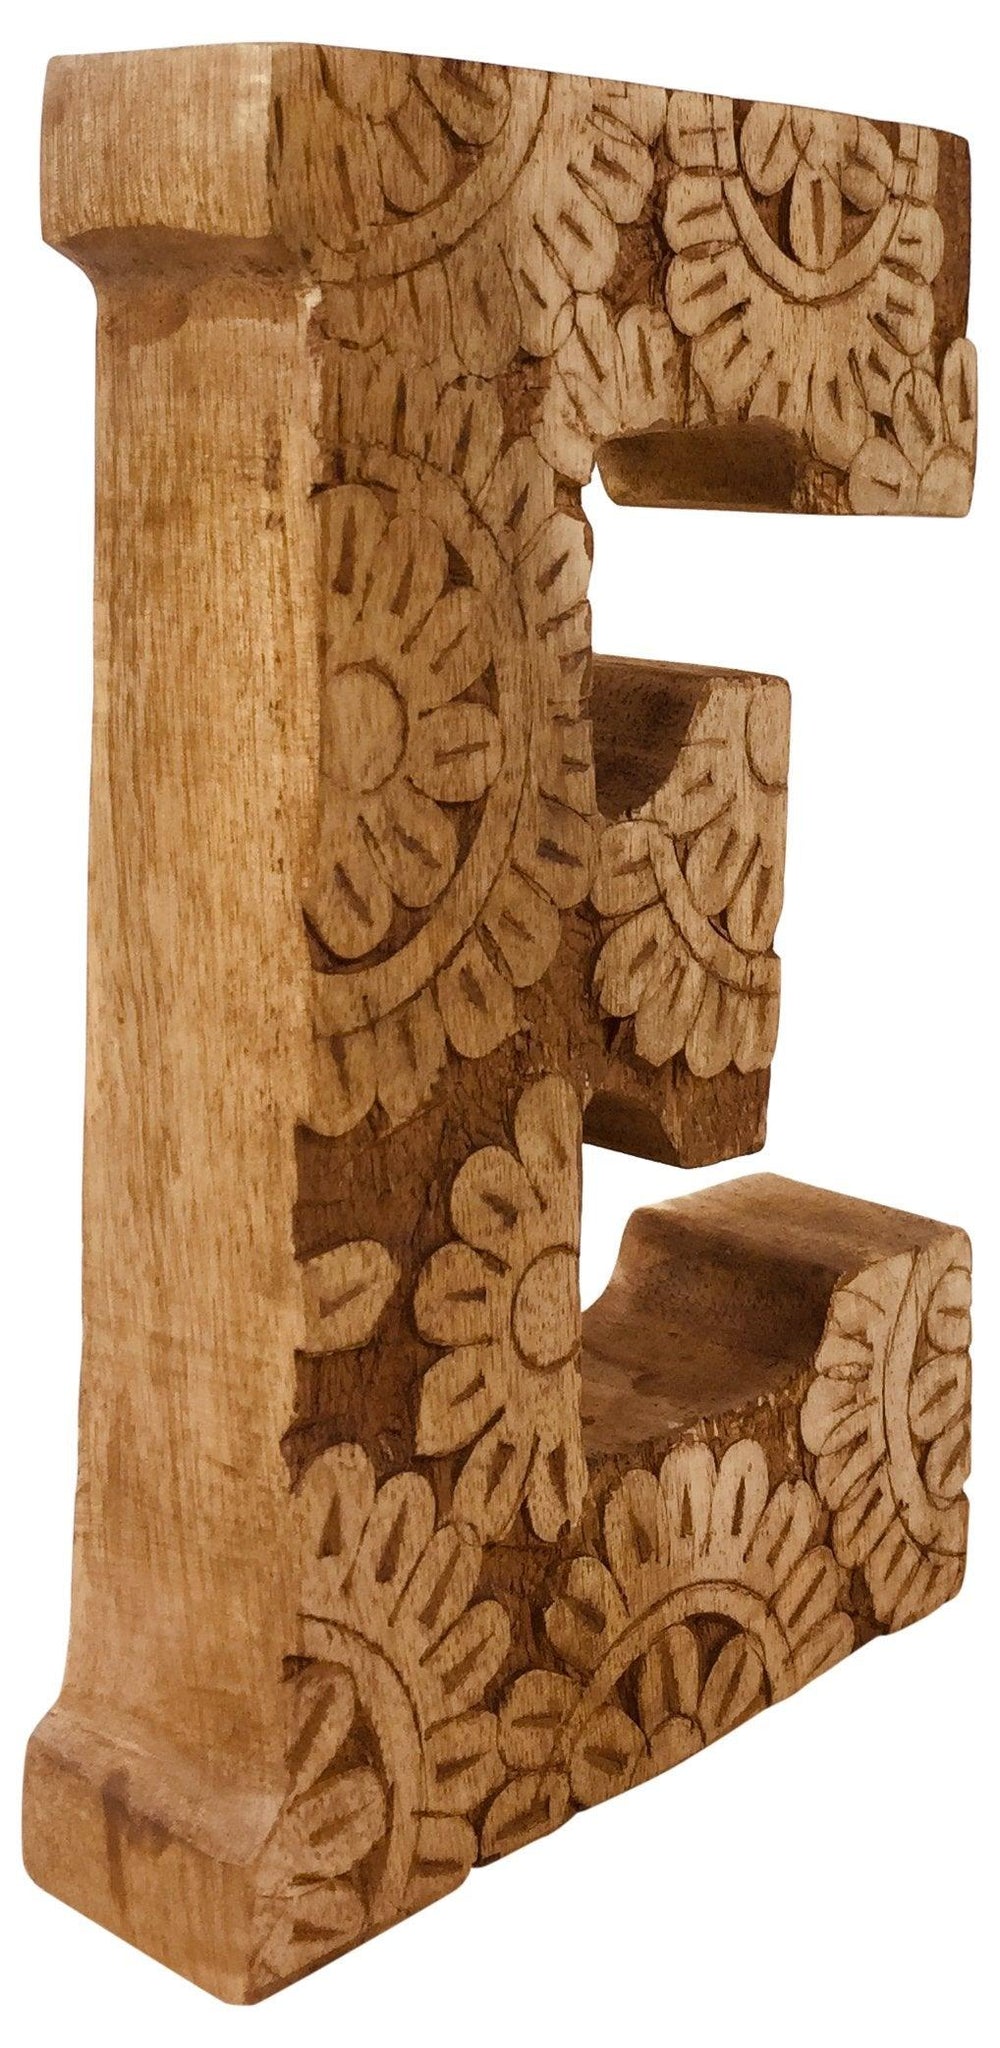 Hand Carved Wooden Flower Letter E - £12.99 - Single Letters 